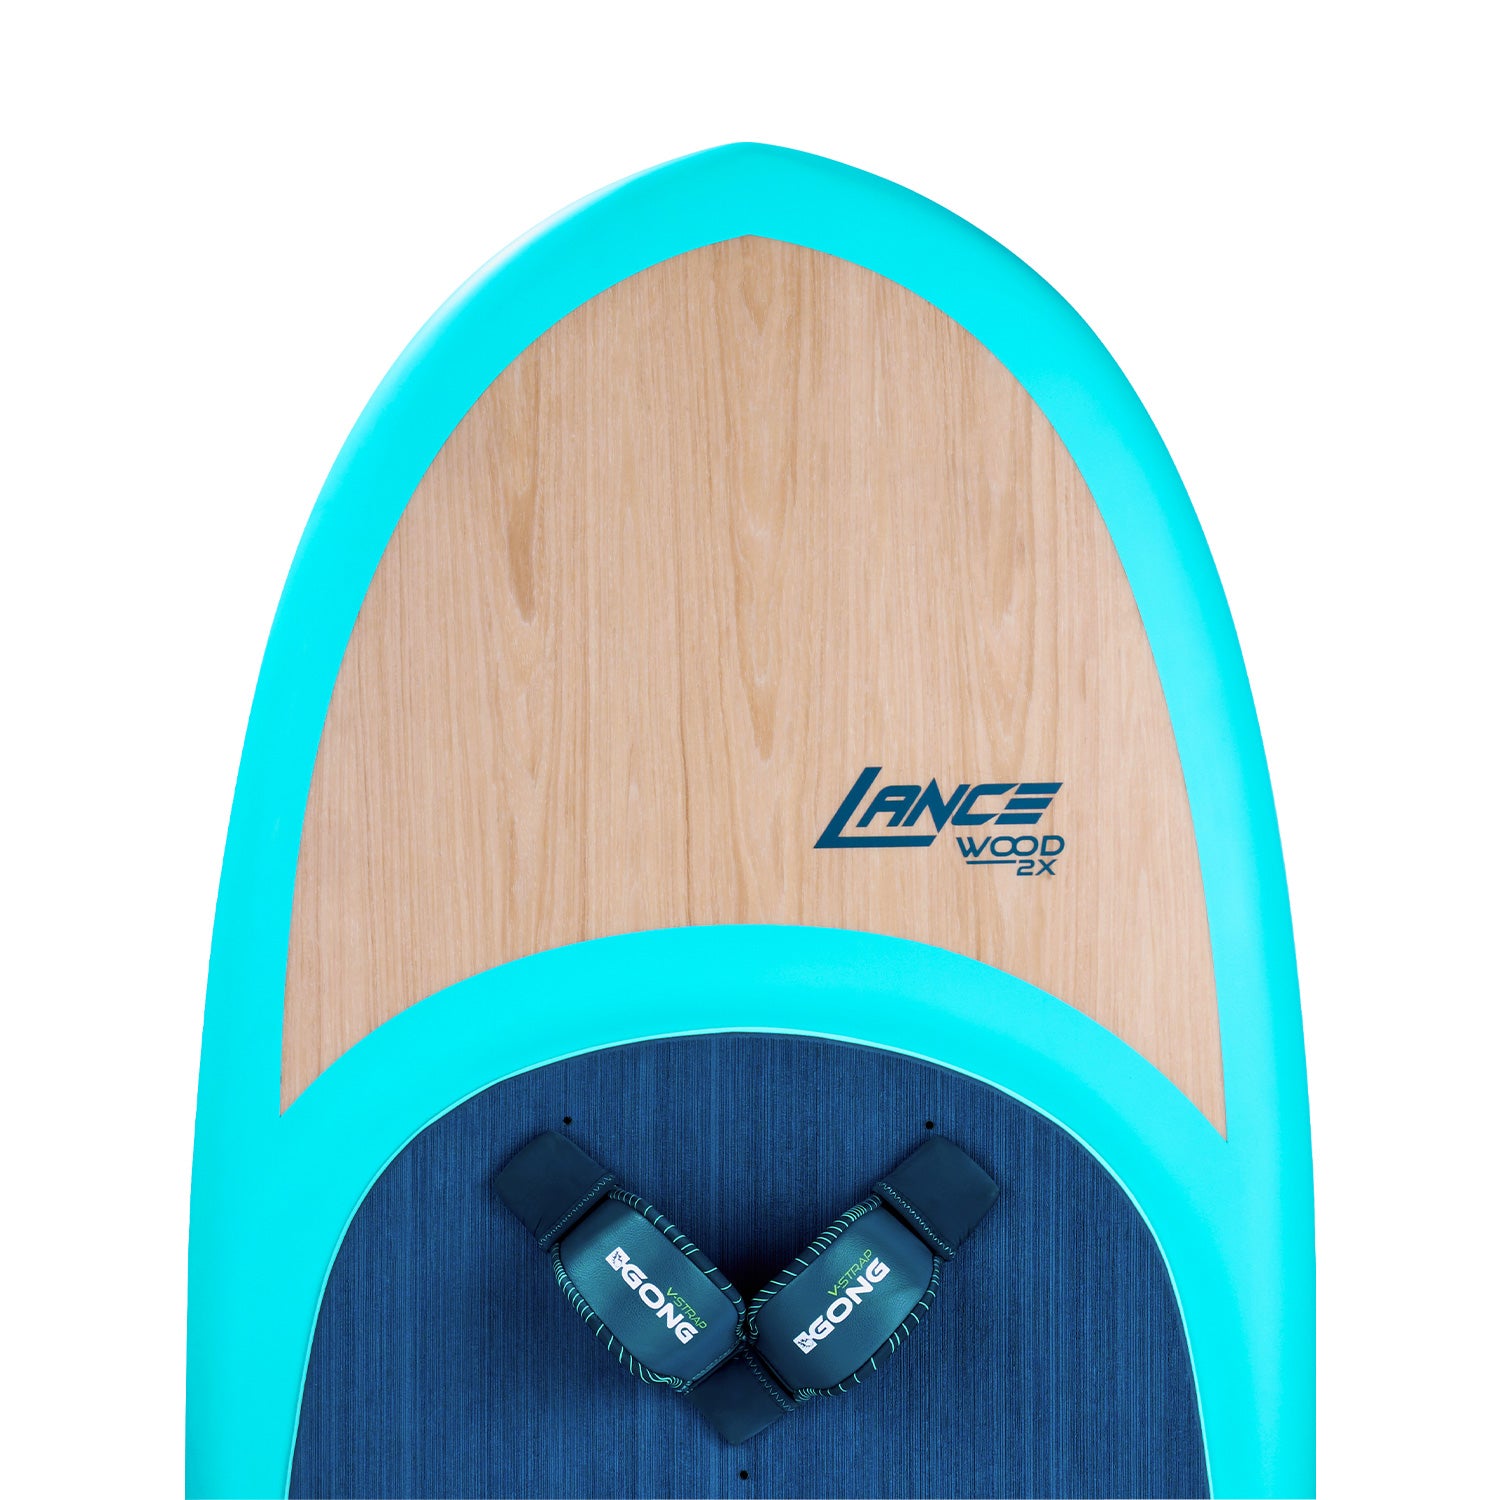 GONG | Wing Foil Board Lance Wood 2X